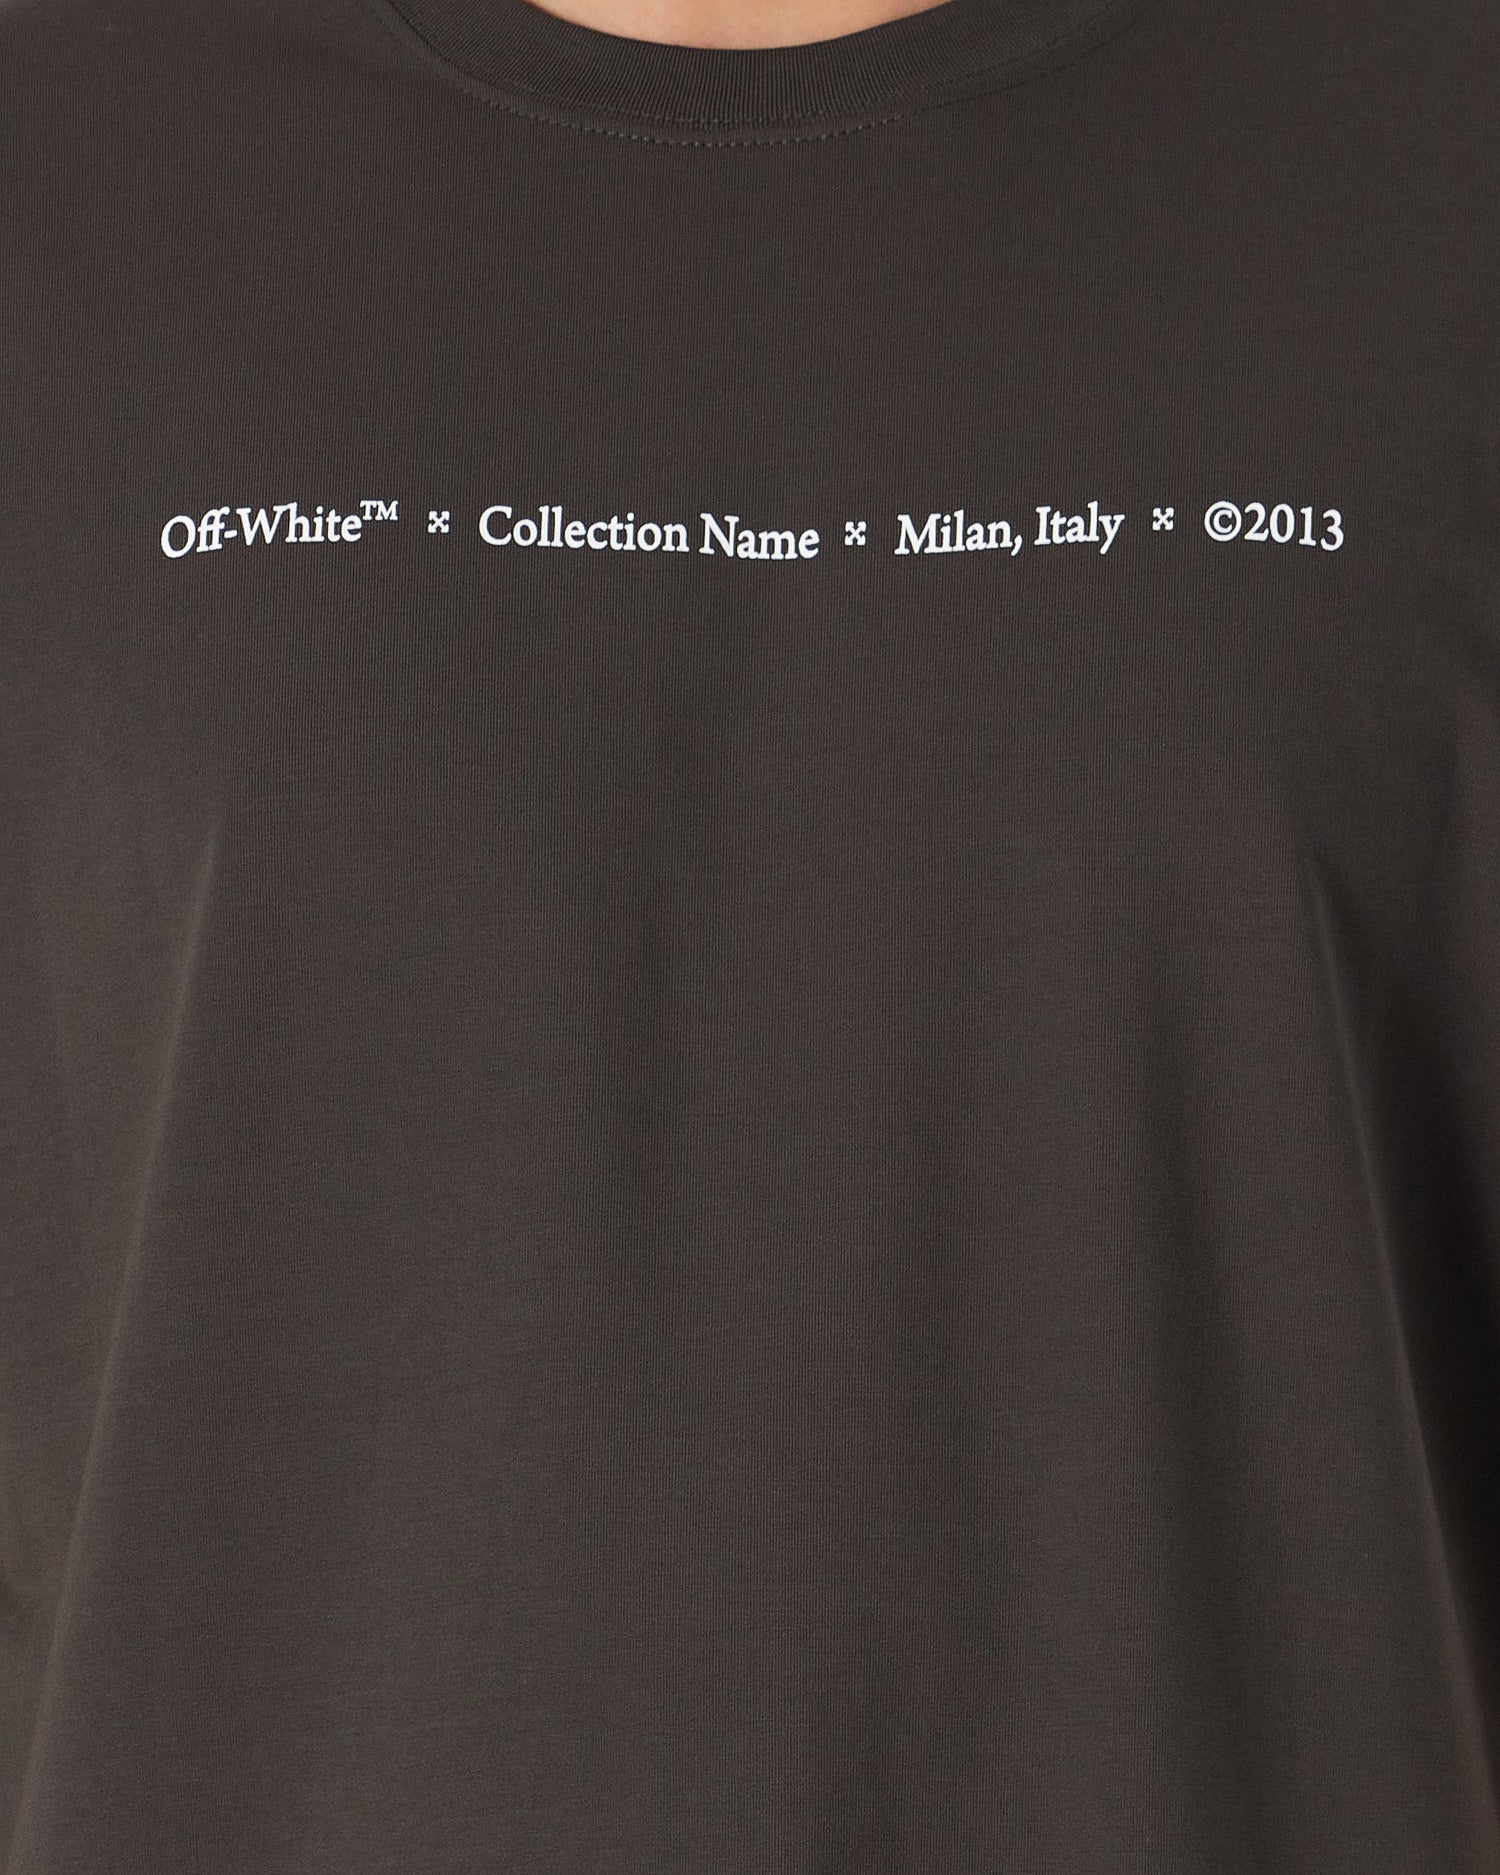 MOI OUTFIT-OW Back Cross Arrow Men Grey T-Shirt 18.90